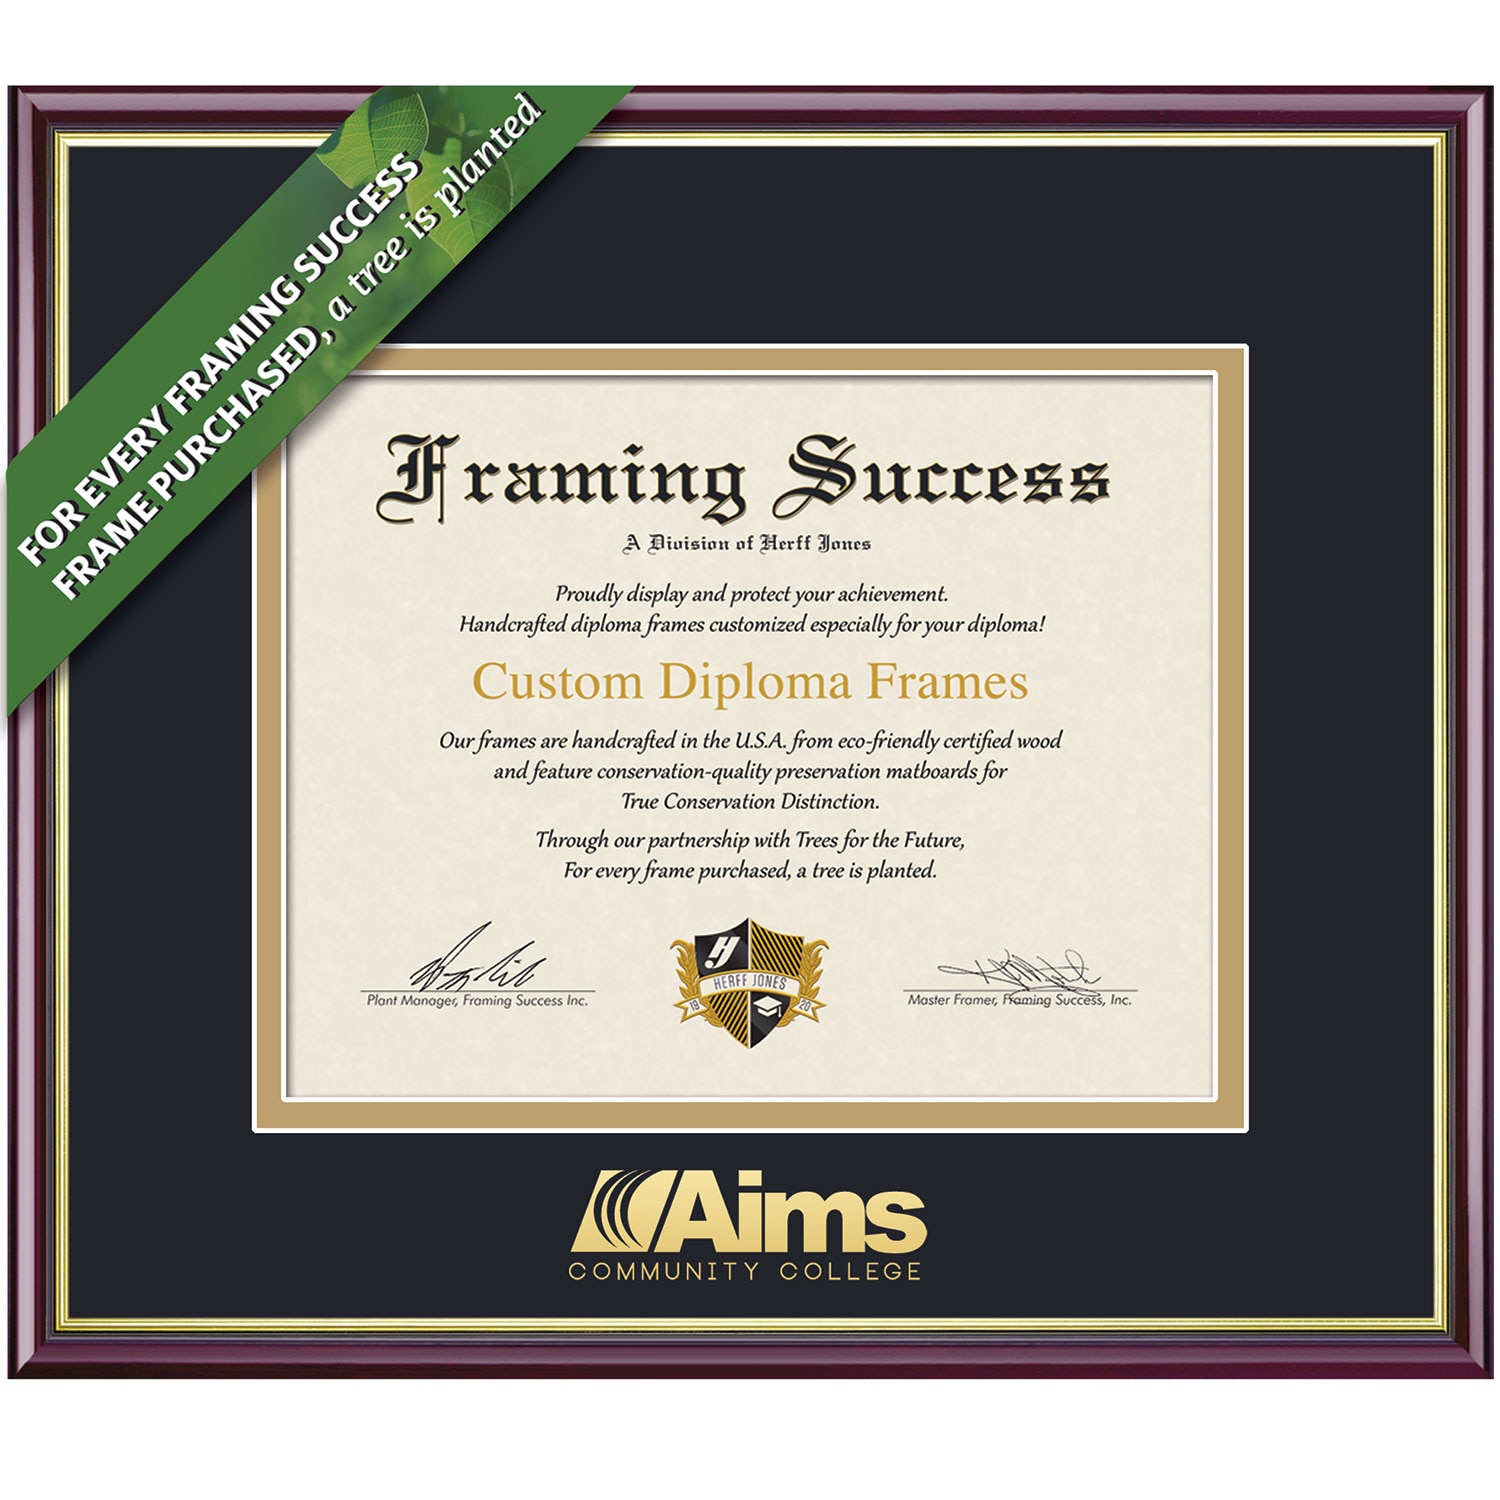 Framing Success 8 x 10 Academic Gold Embossed School Name Associates Diploma Frame